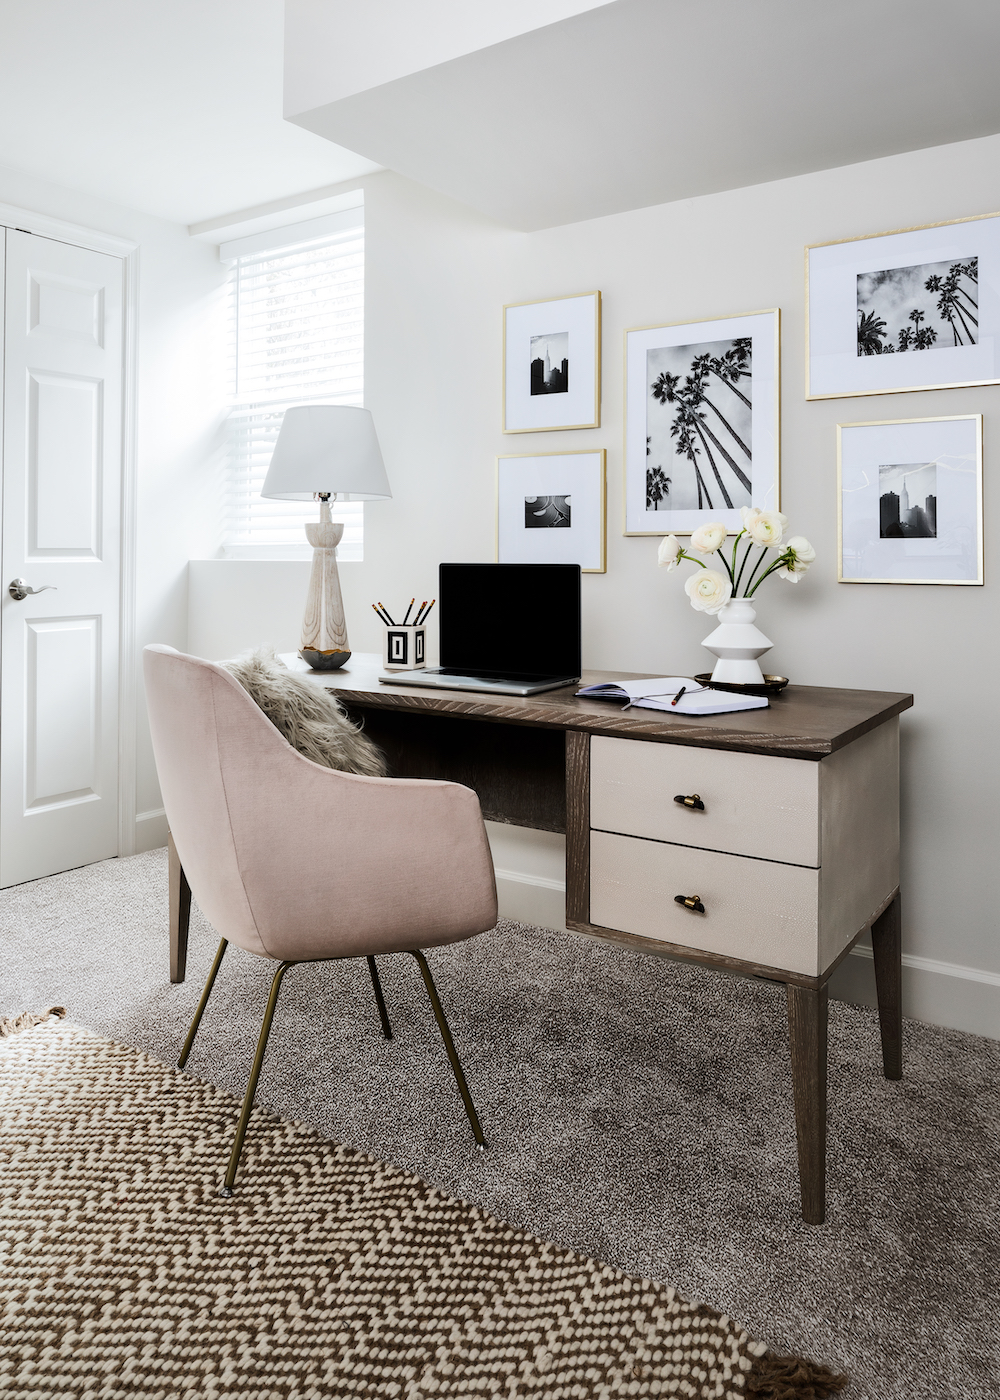 potomac-md-finished-basement-interior-design-desk-pink-chair